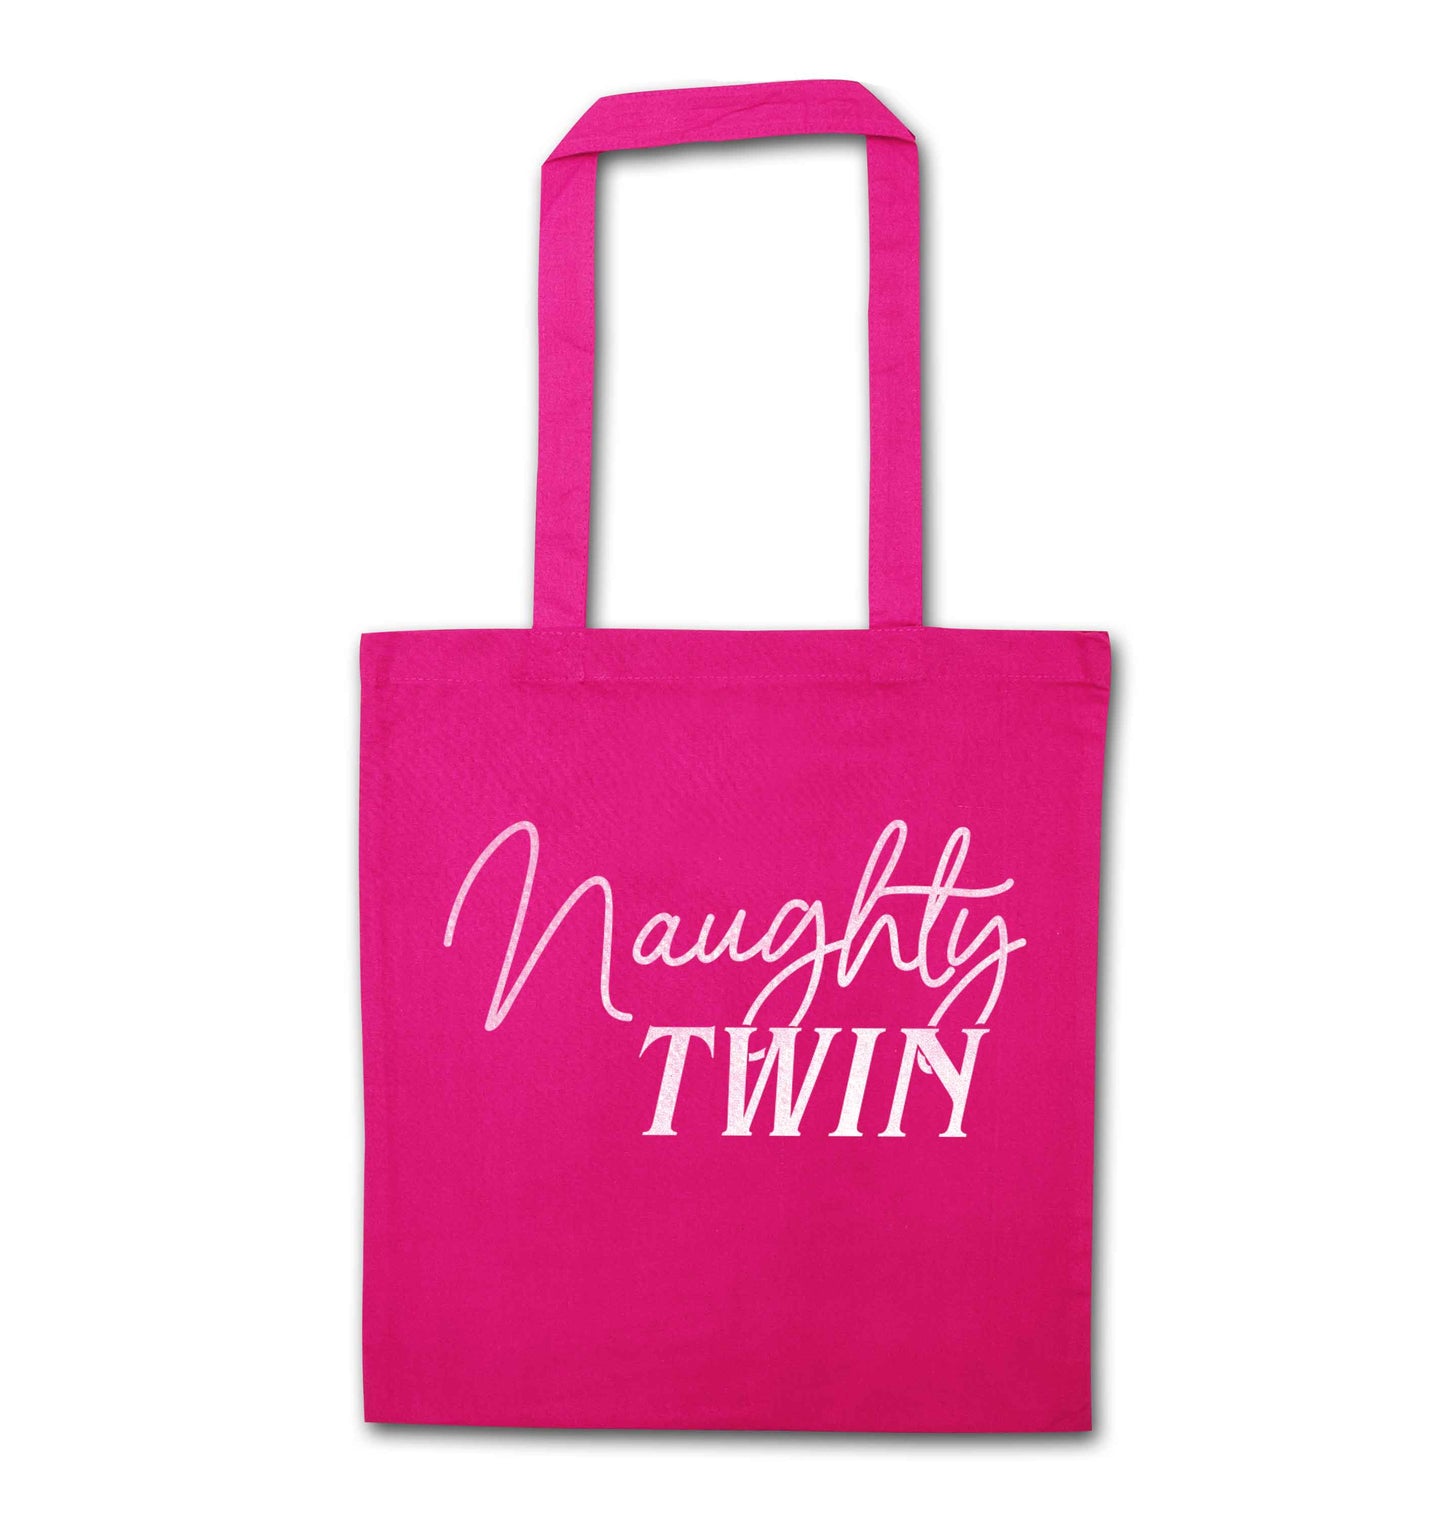 Naughty twin pink tote bag